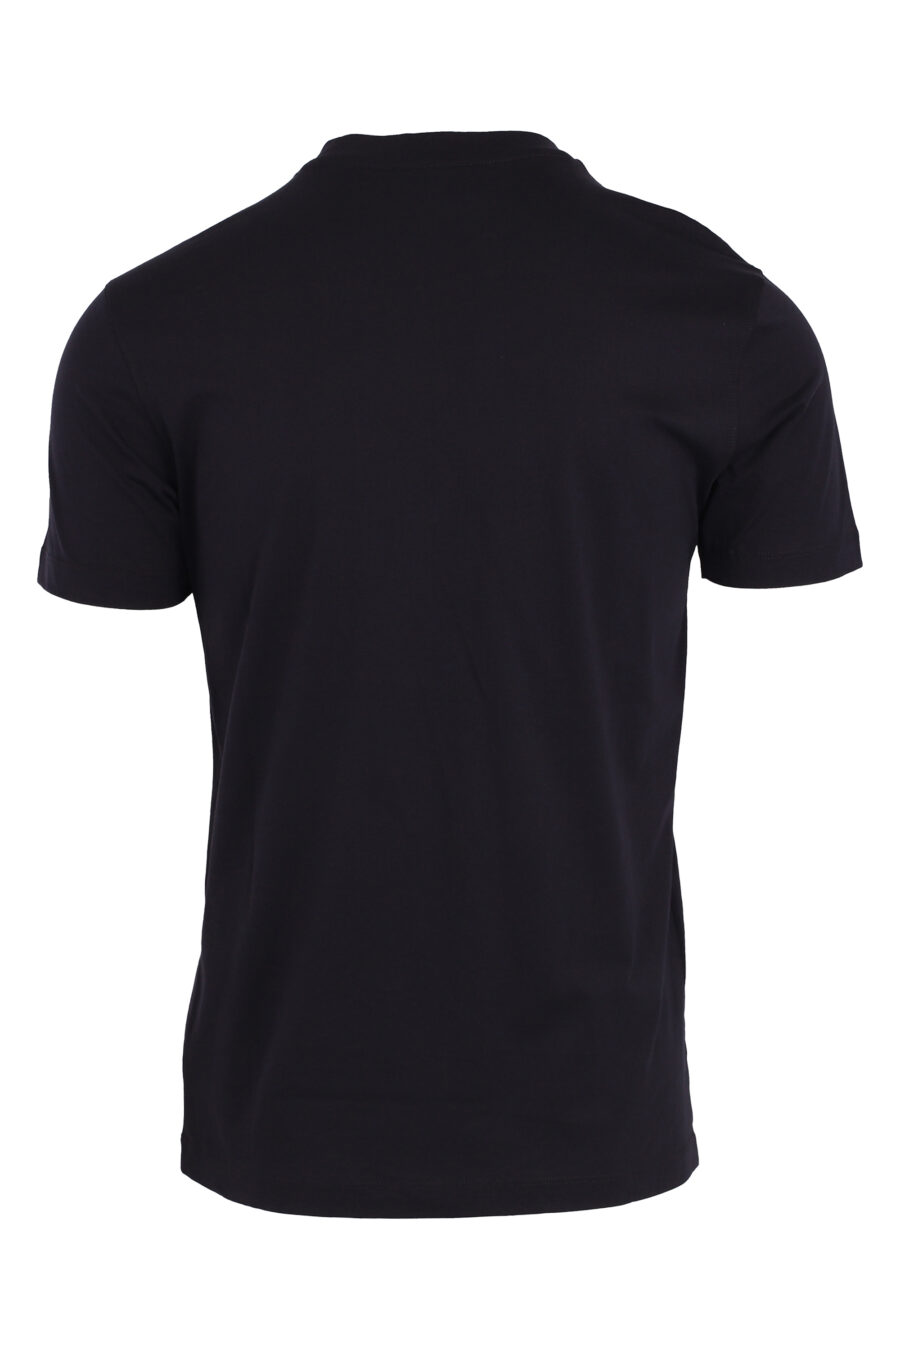 Dunkelblaues T-Shirt mit Maxilog aus Samt - IMG 4745